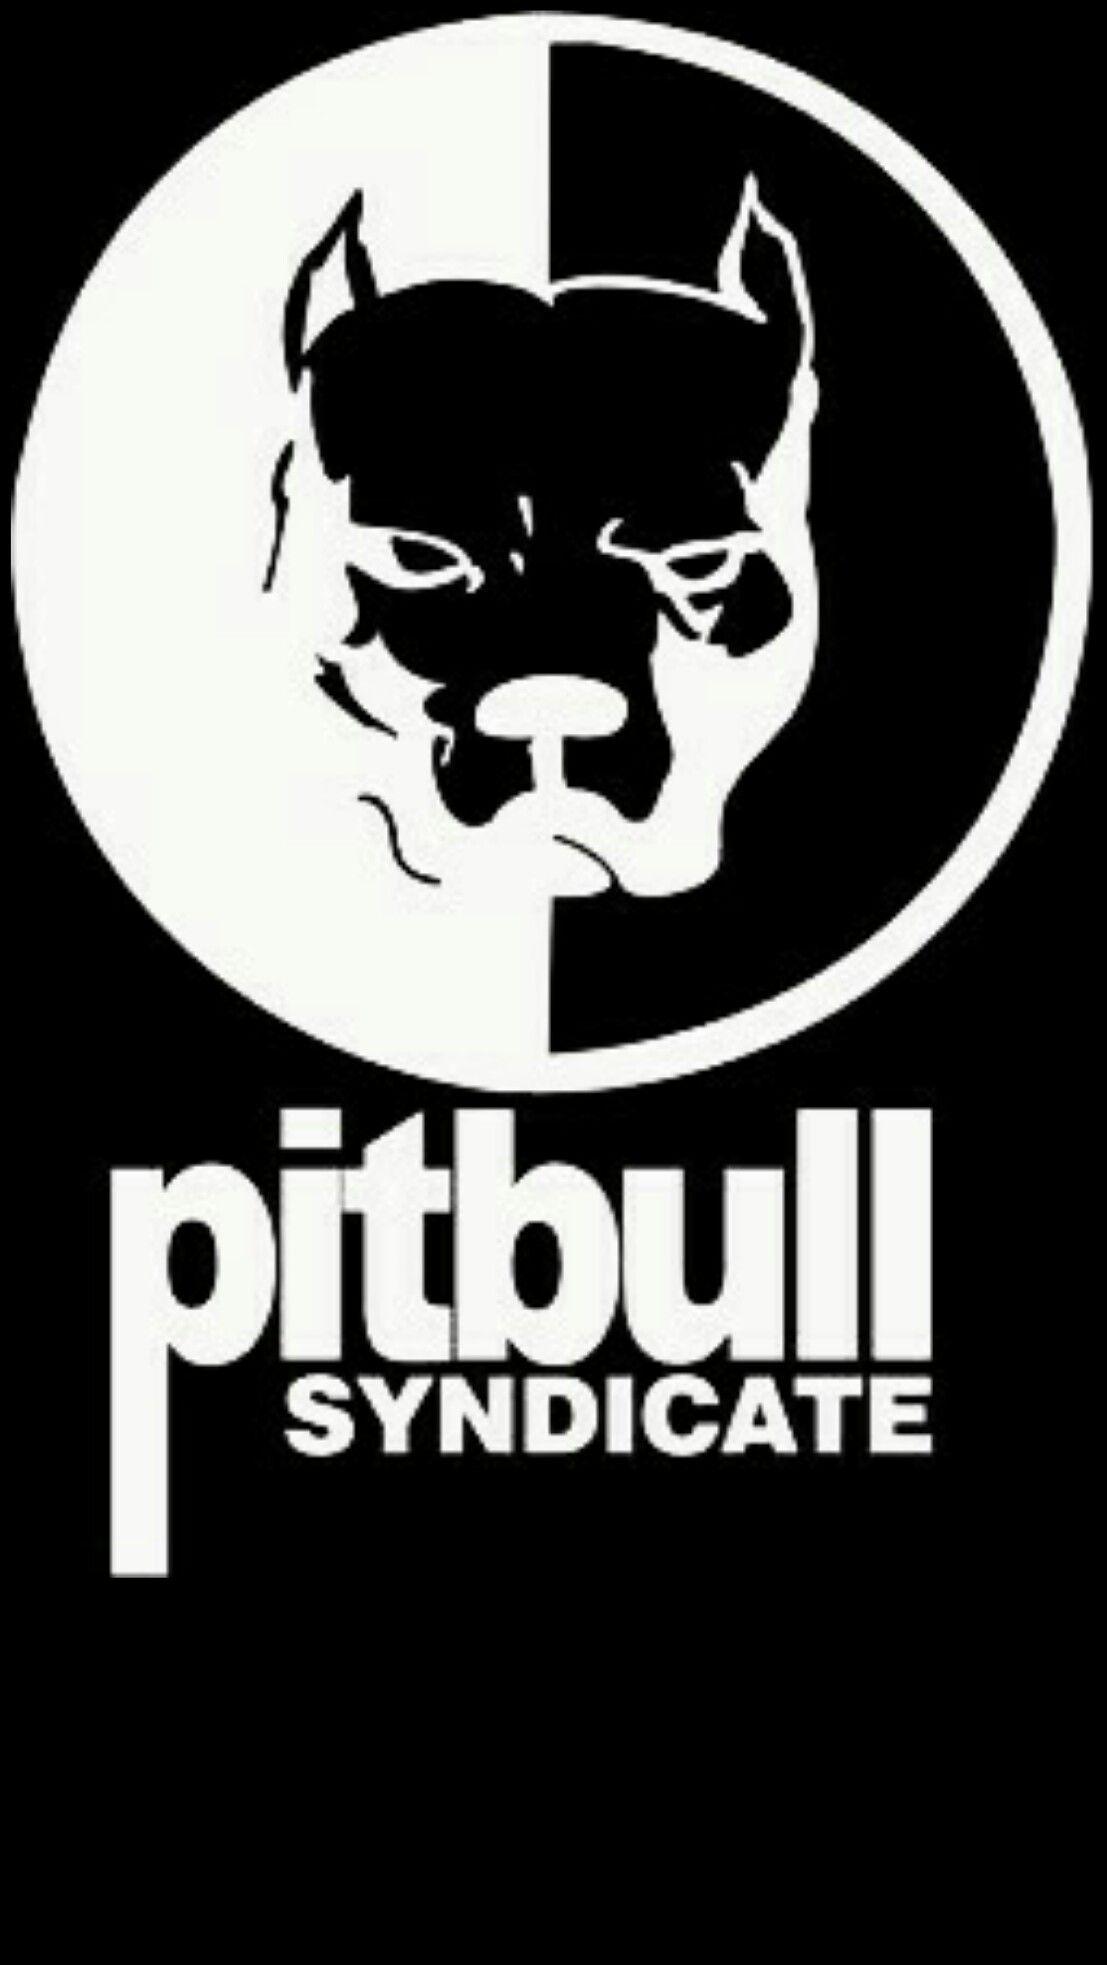 pitbull logo wallpaper